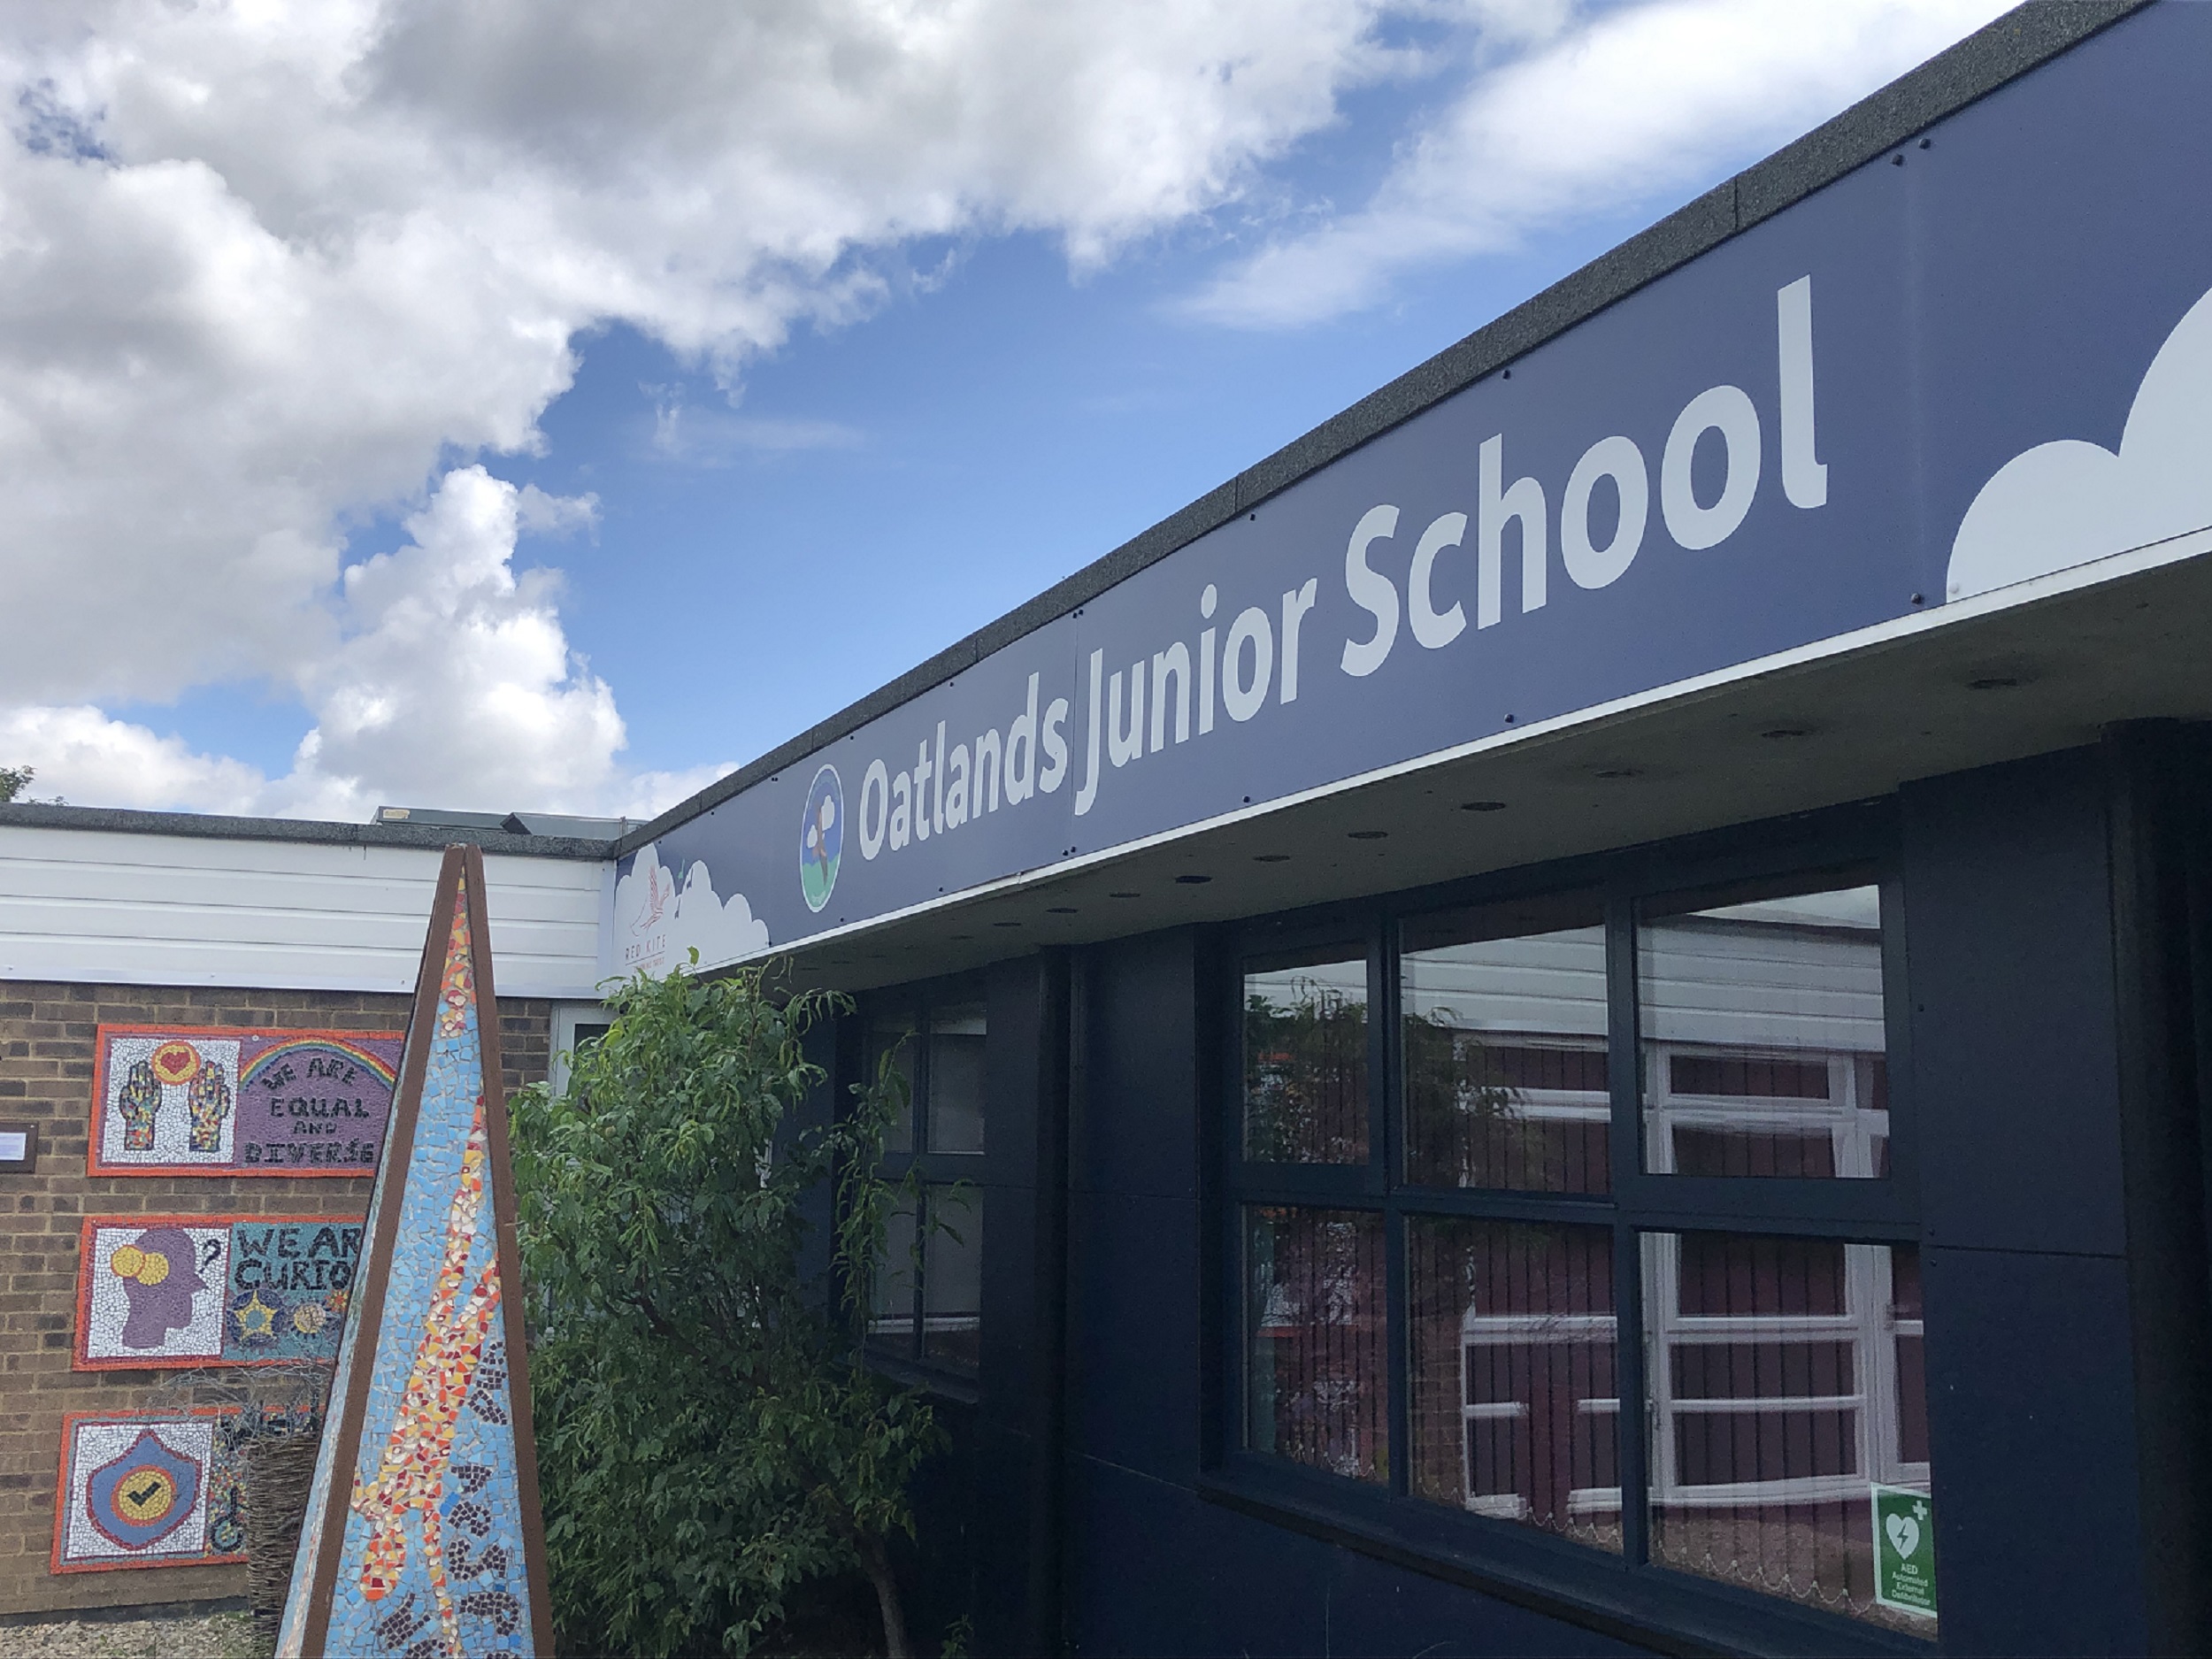 Oatlands Junior School in Harrogate